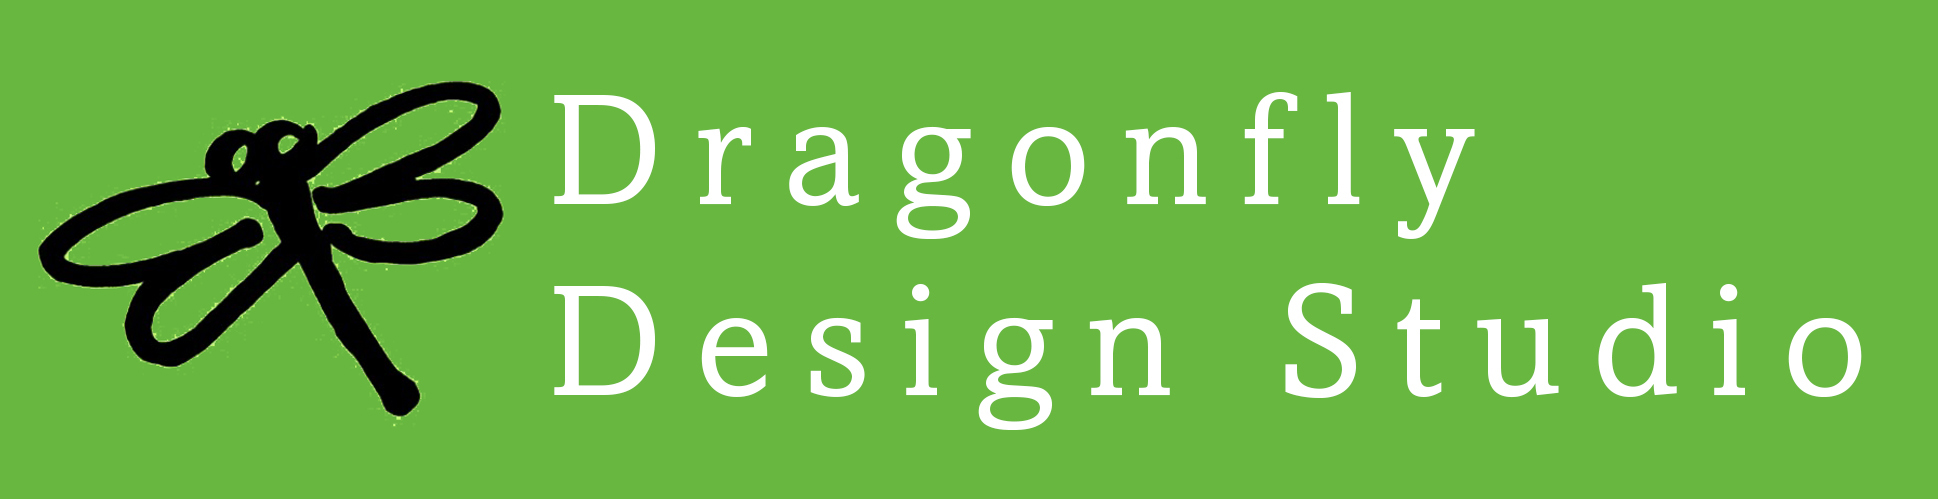 Dragonfly Design Studio